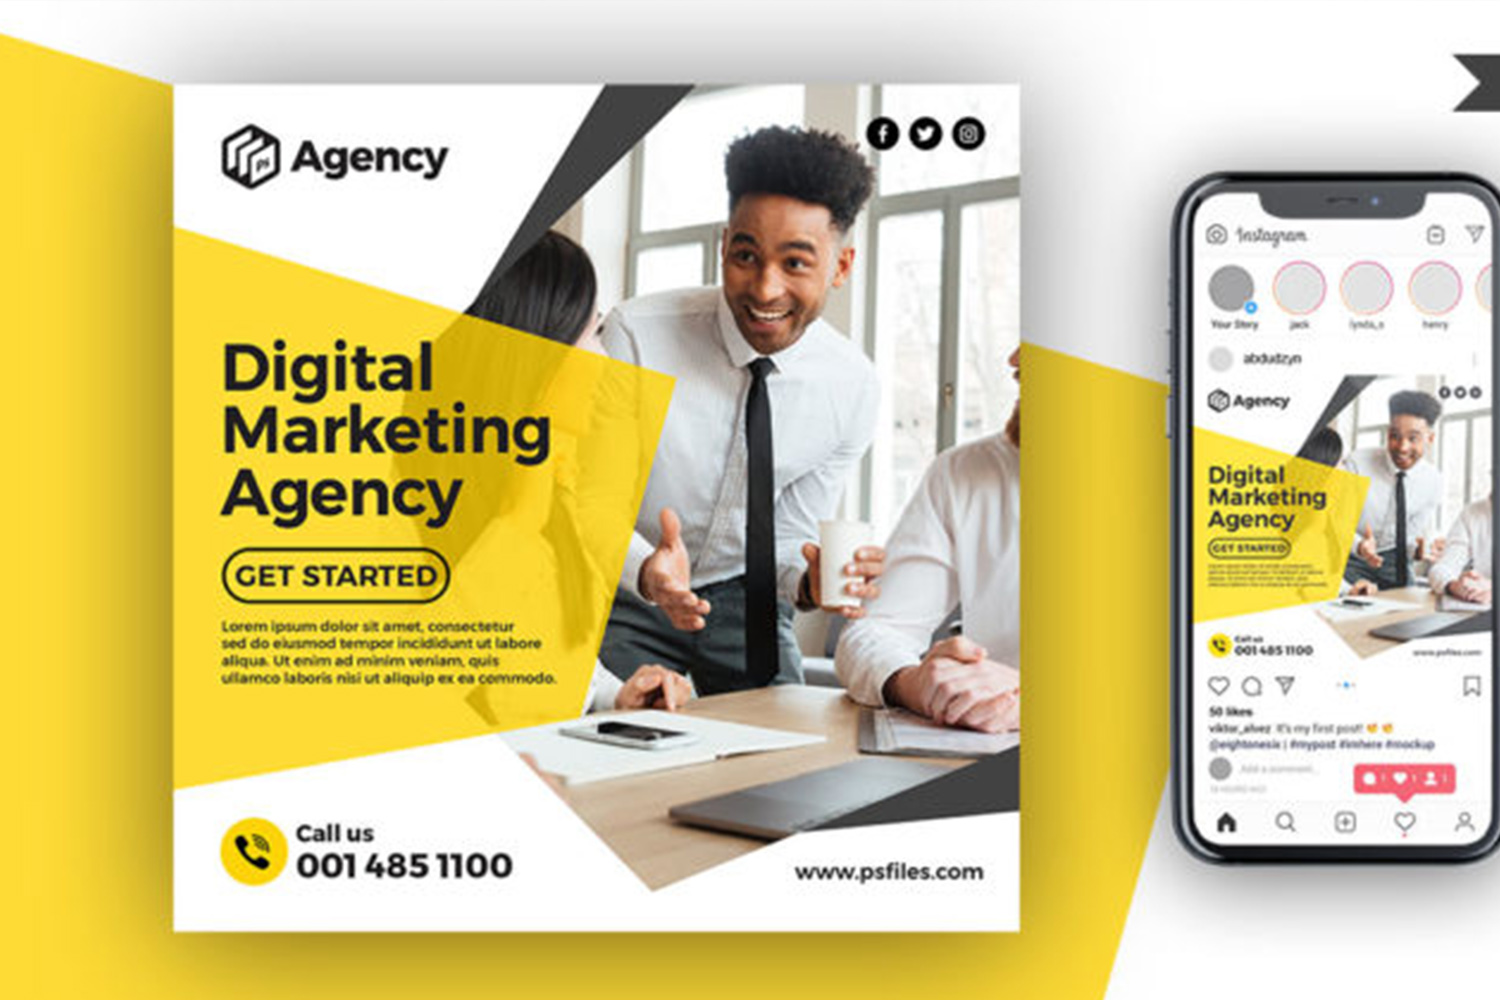 Digital Marketing Agency Social Post Design Template PSD Free Download